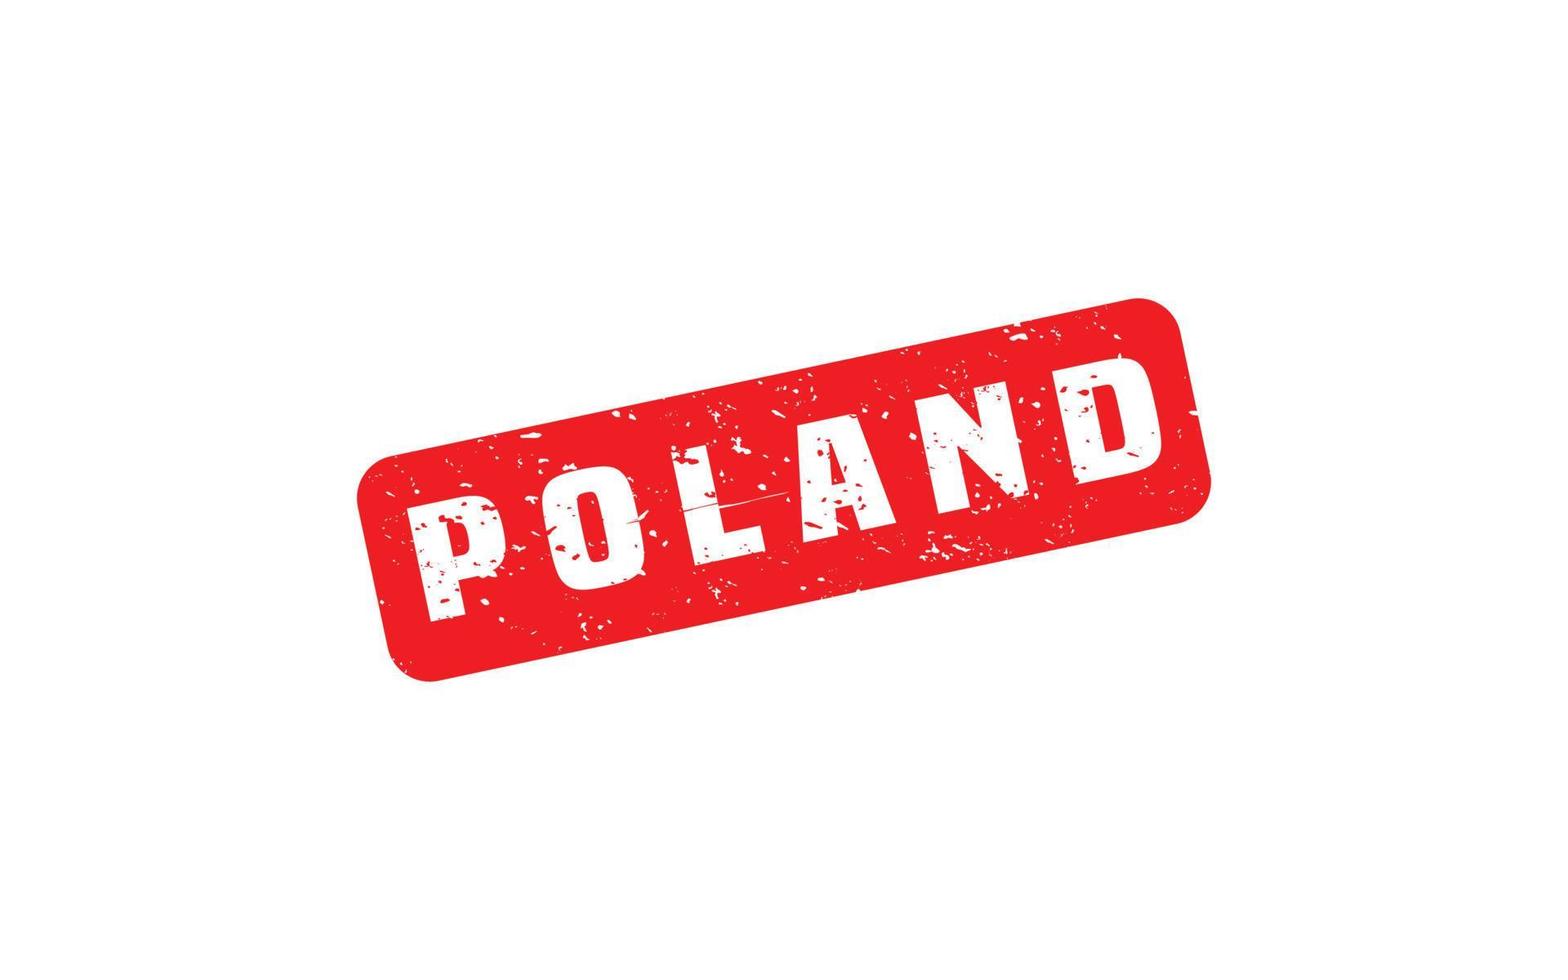 borracha de carimbo da Polónia com estilo grunge em fundo branco vetor